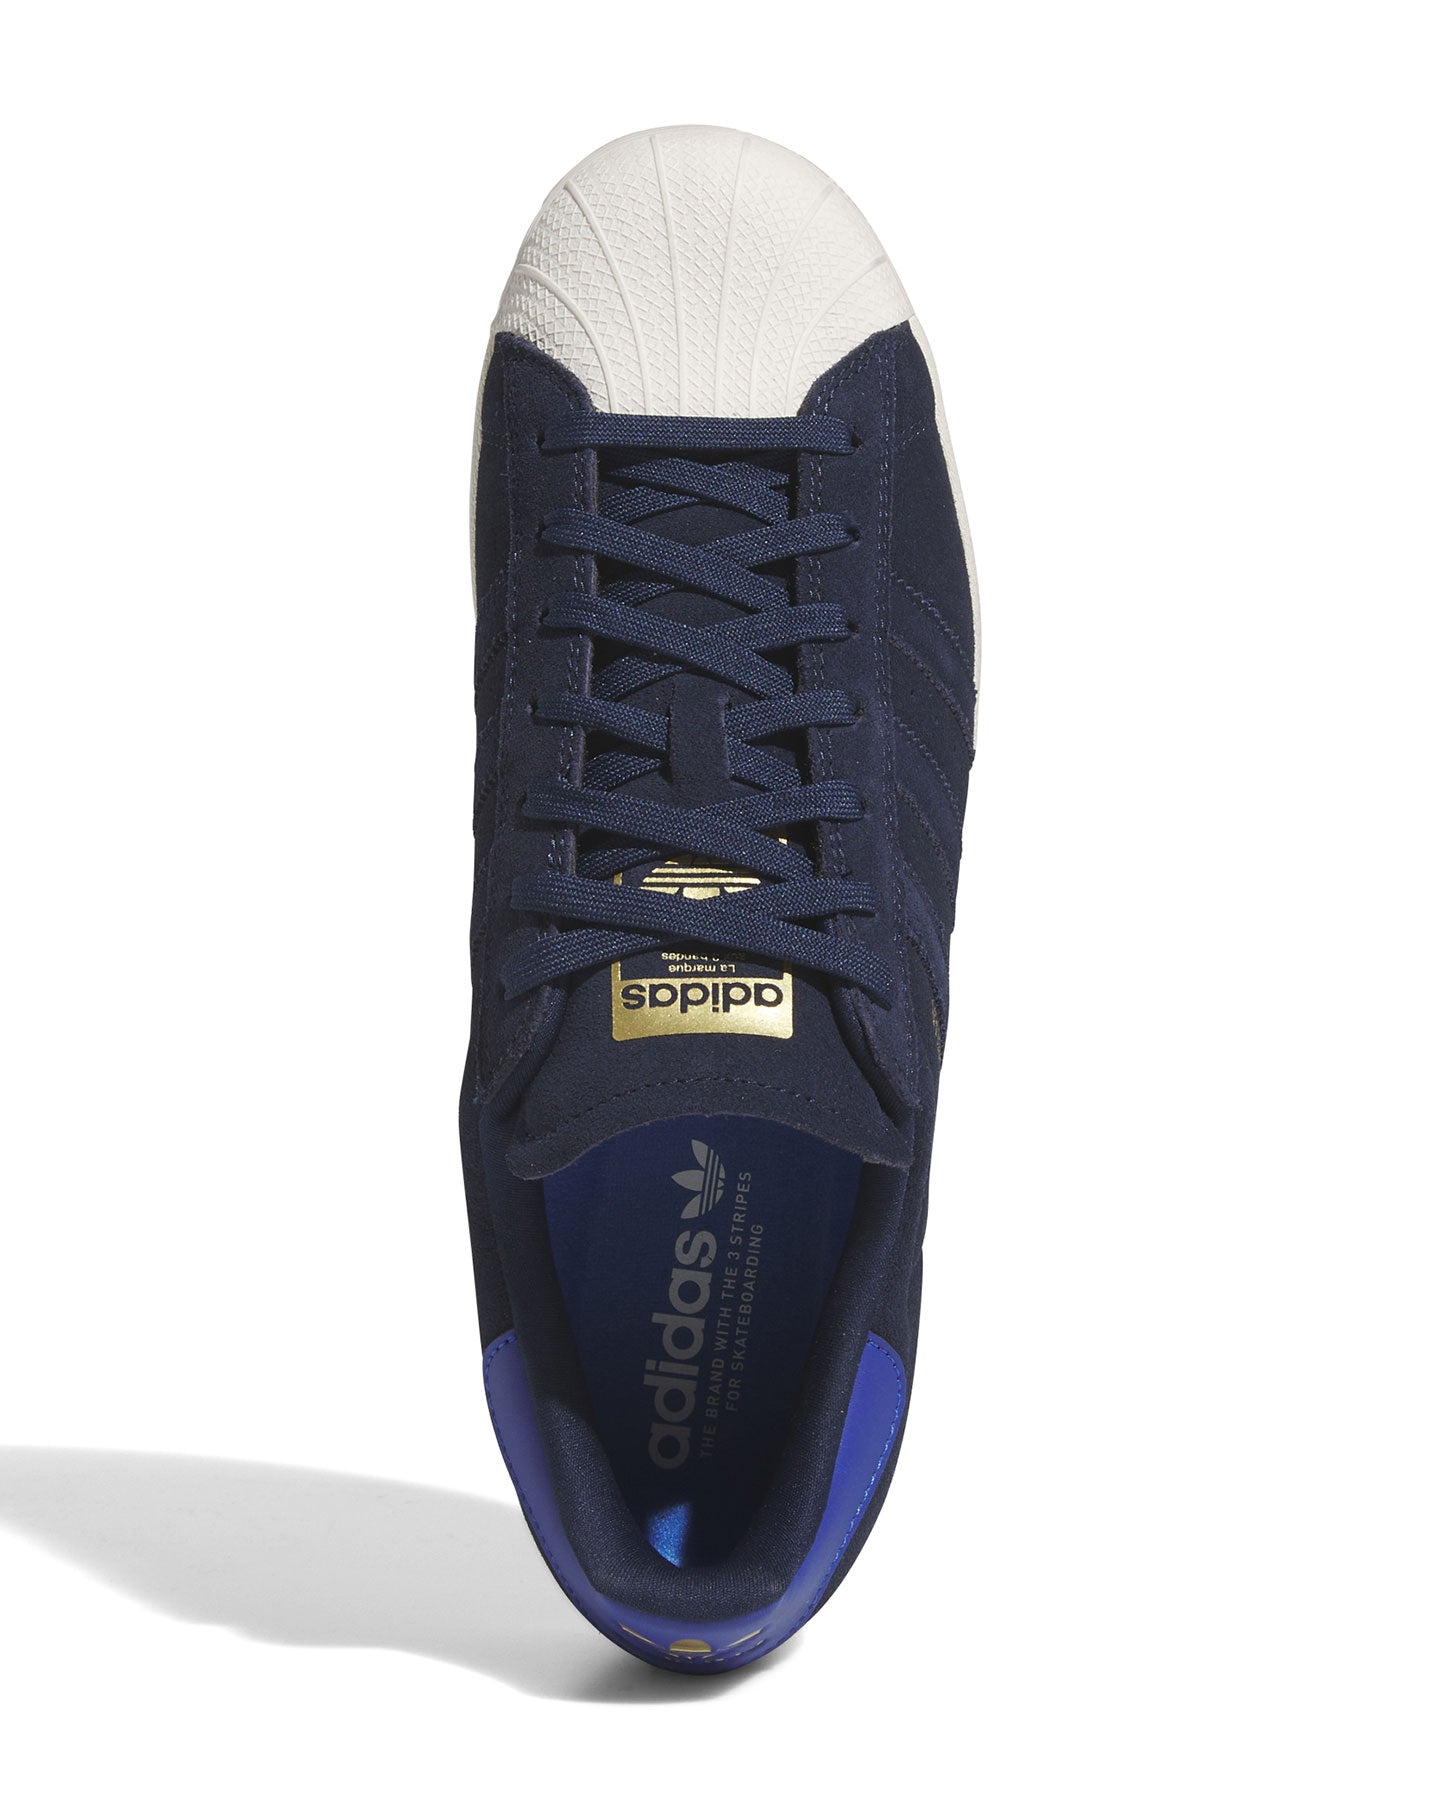 Adidas Superstar ADV - Navy / Royal Blue / Gold Metallic